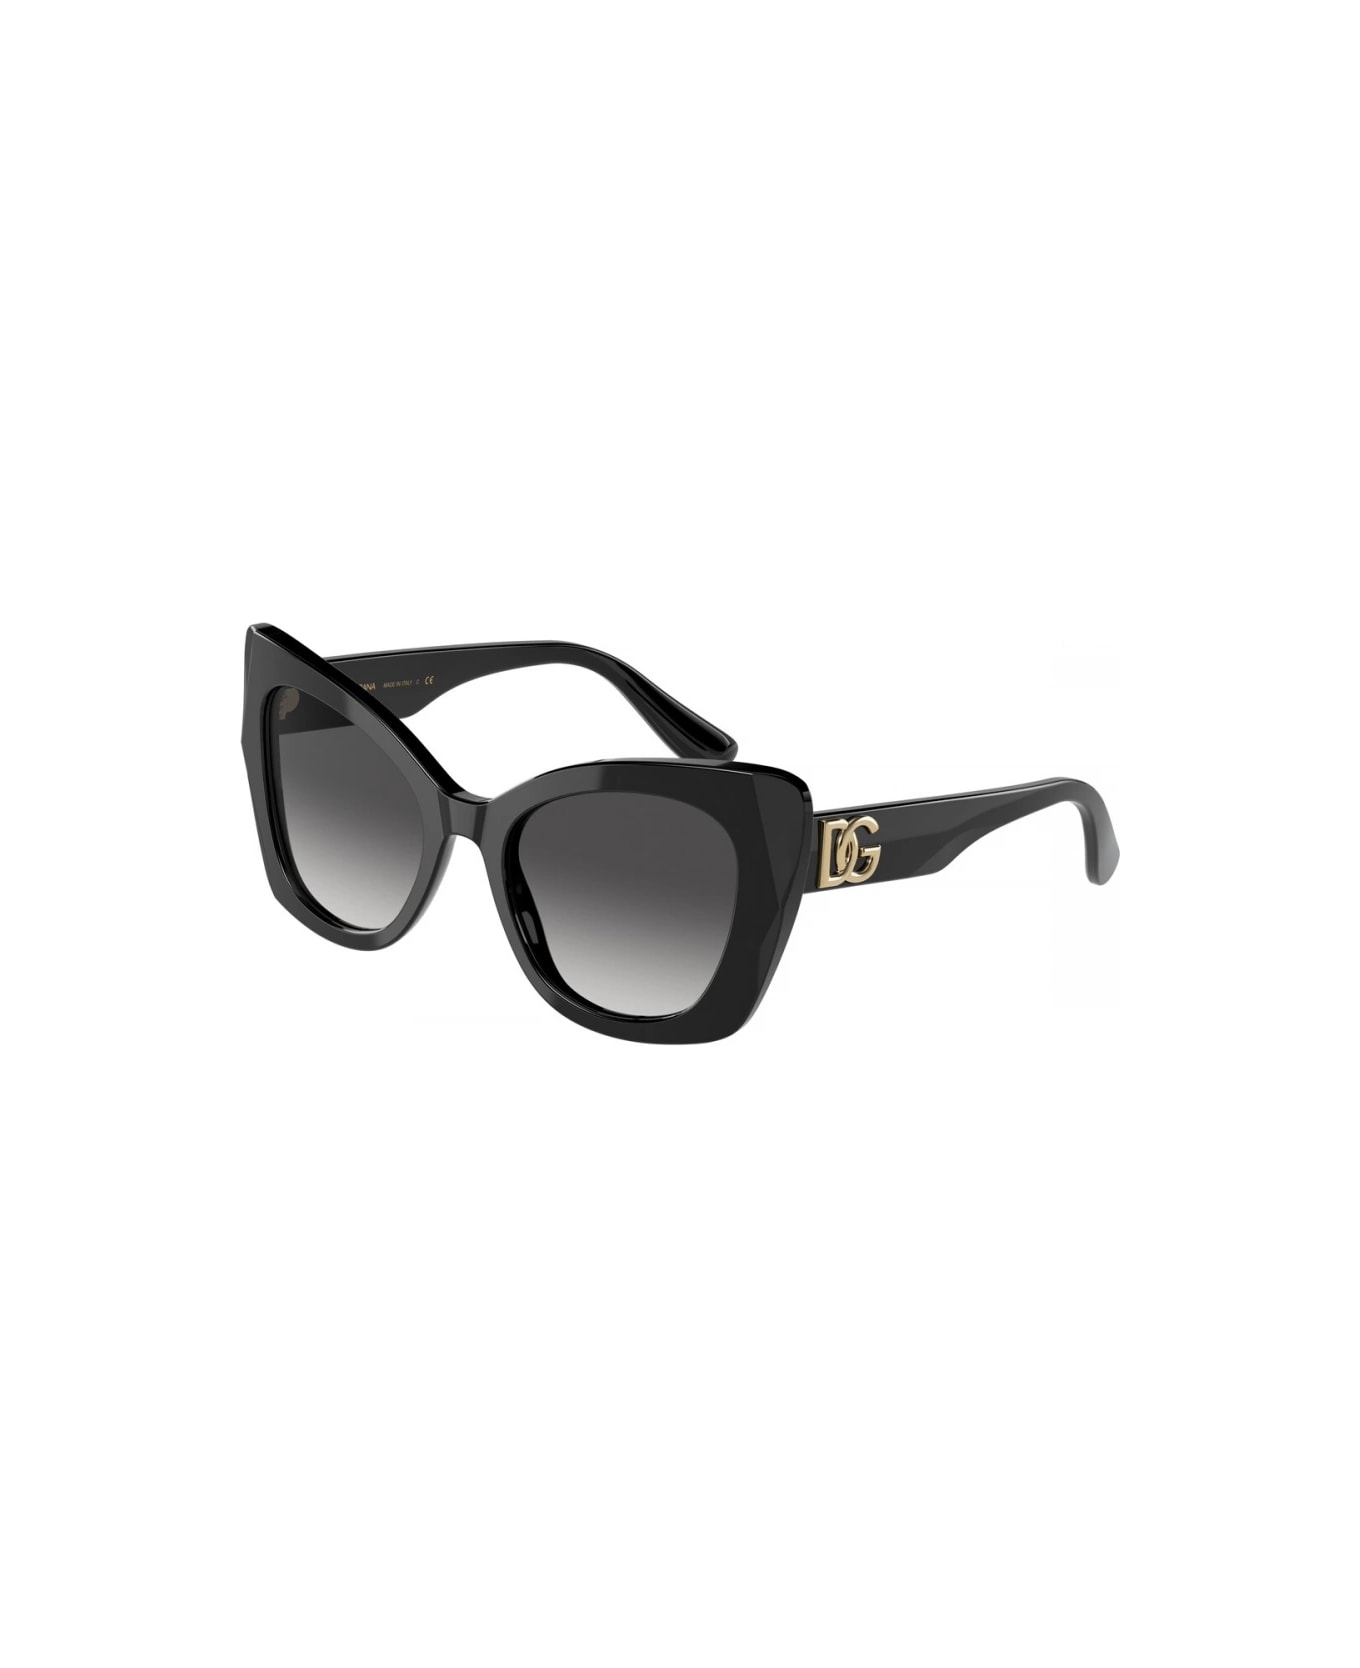 Dolce & Gabbana Eyewear DG4405 501/8G Sunglasses